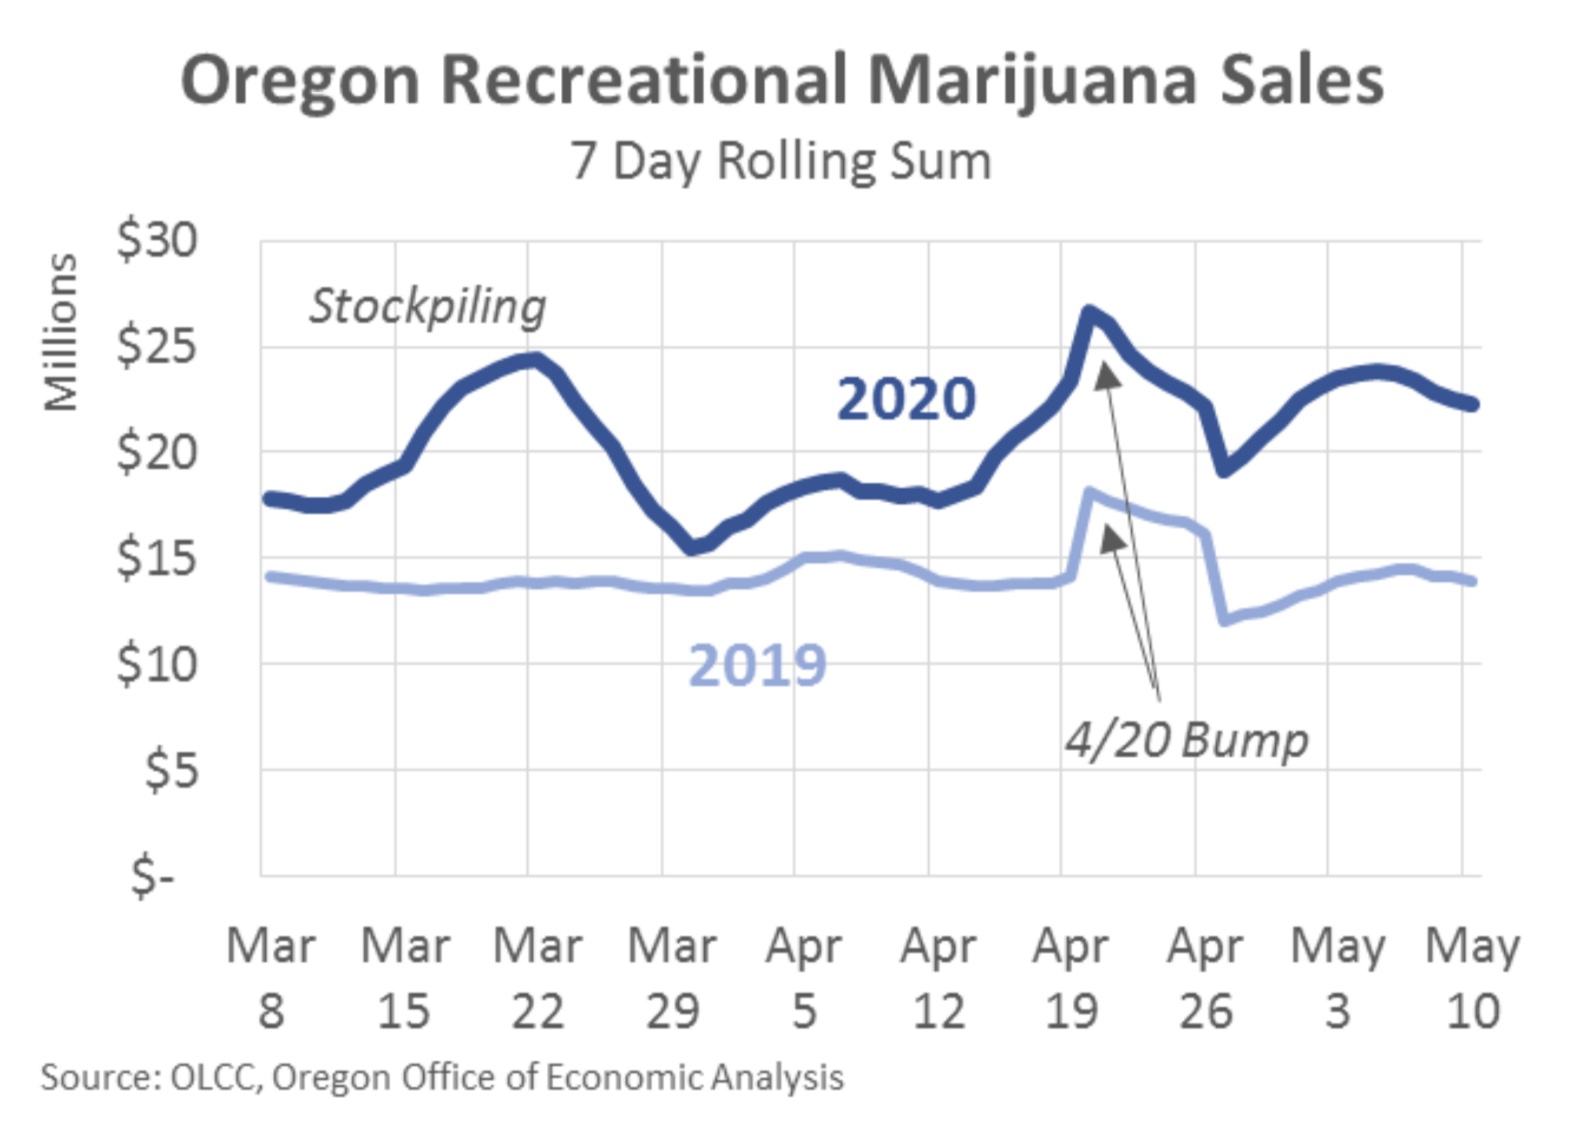 Oregon marijuana sales during COVID-19